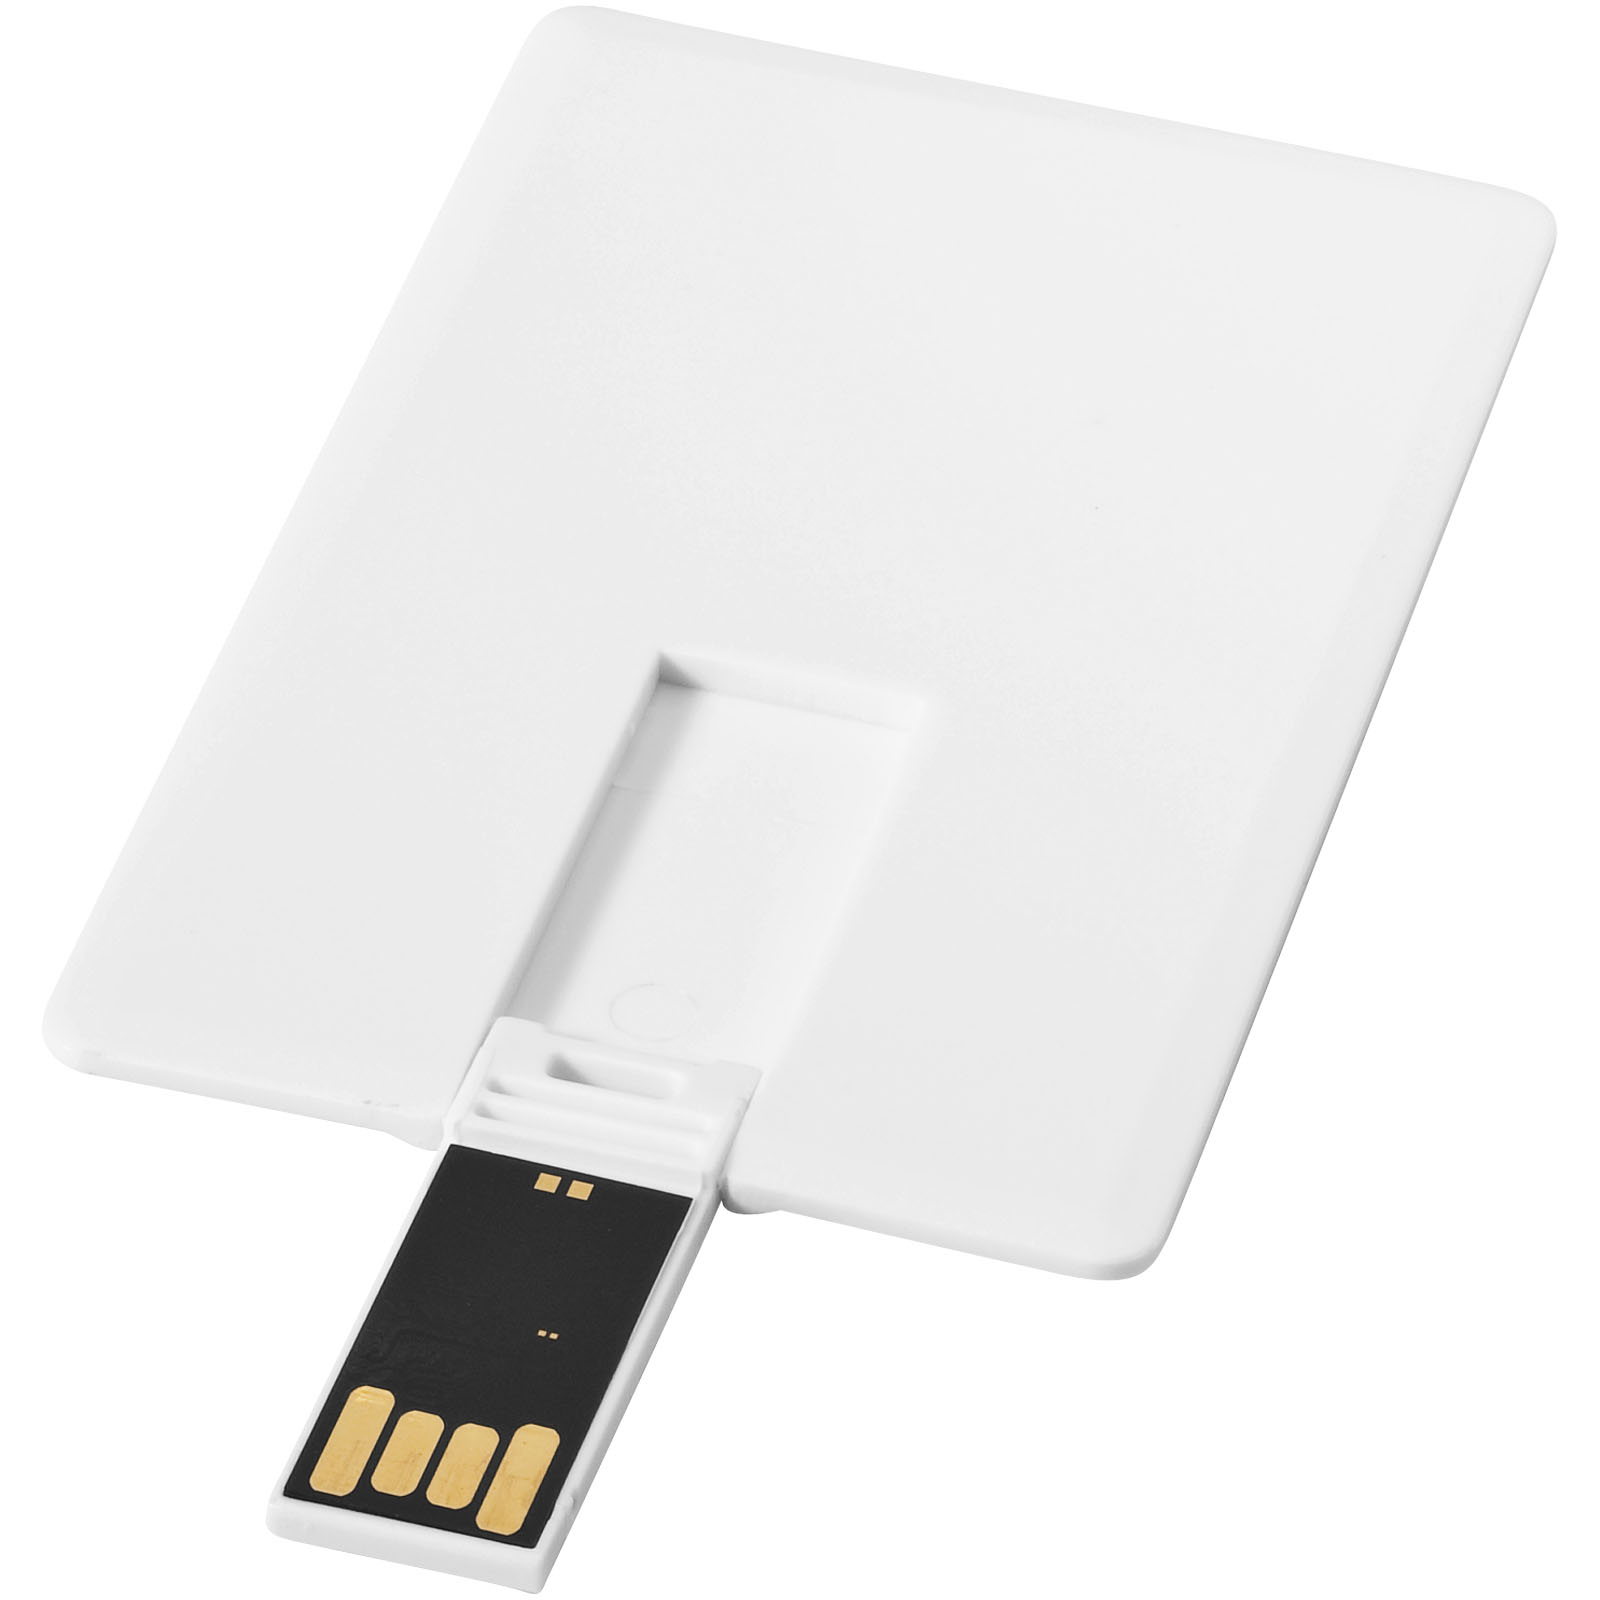 Advertising USB Flash Drives - Slim card-shaped 2GB USB flash drive